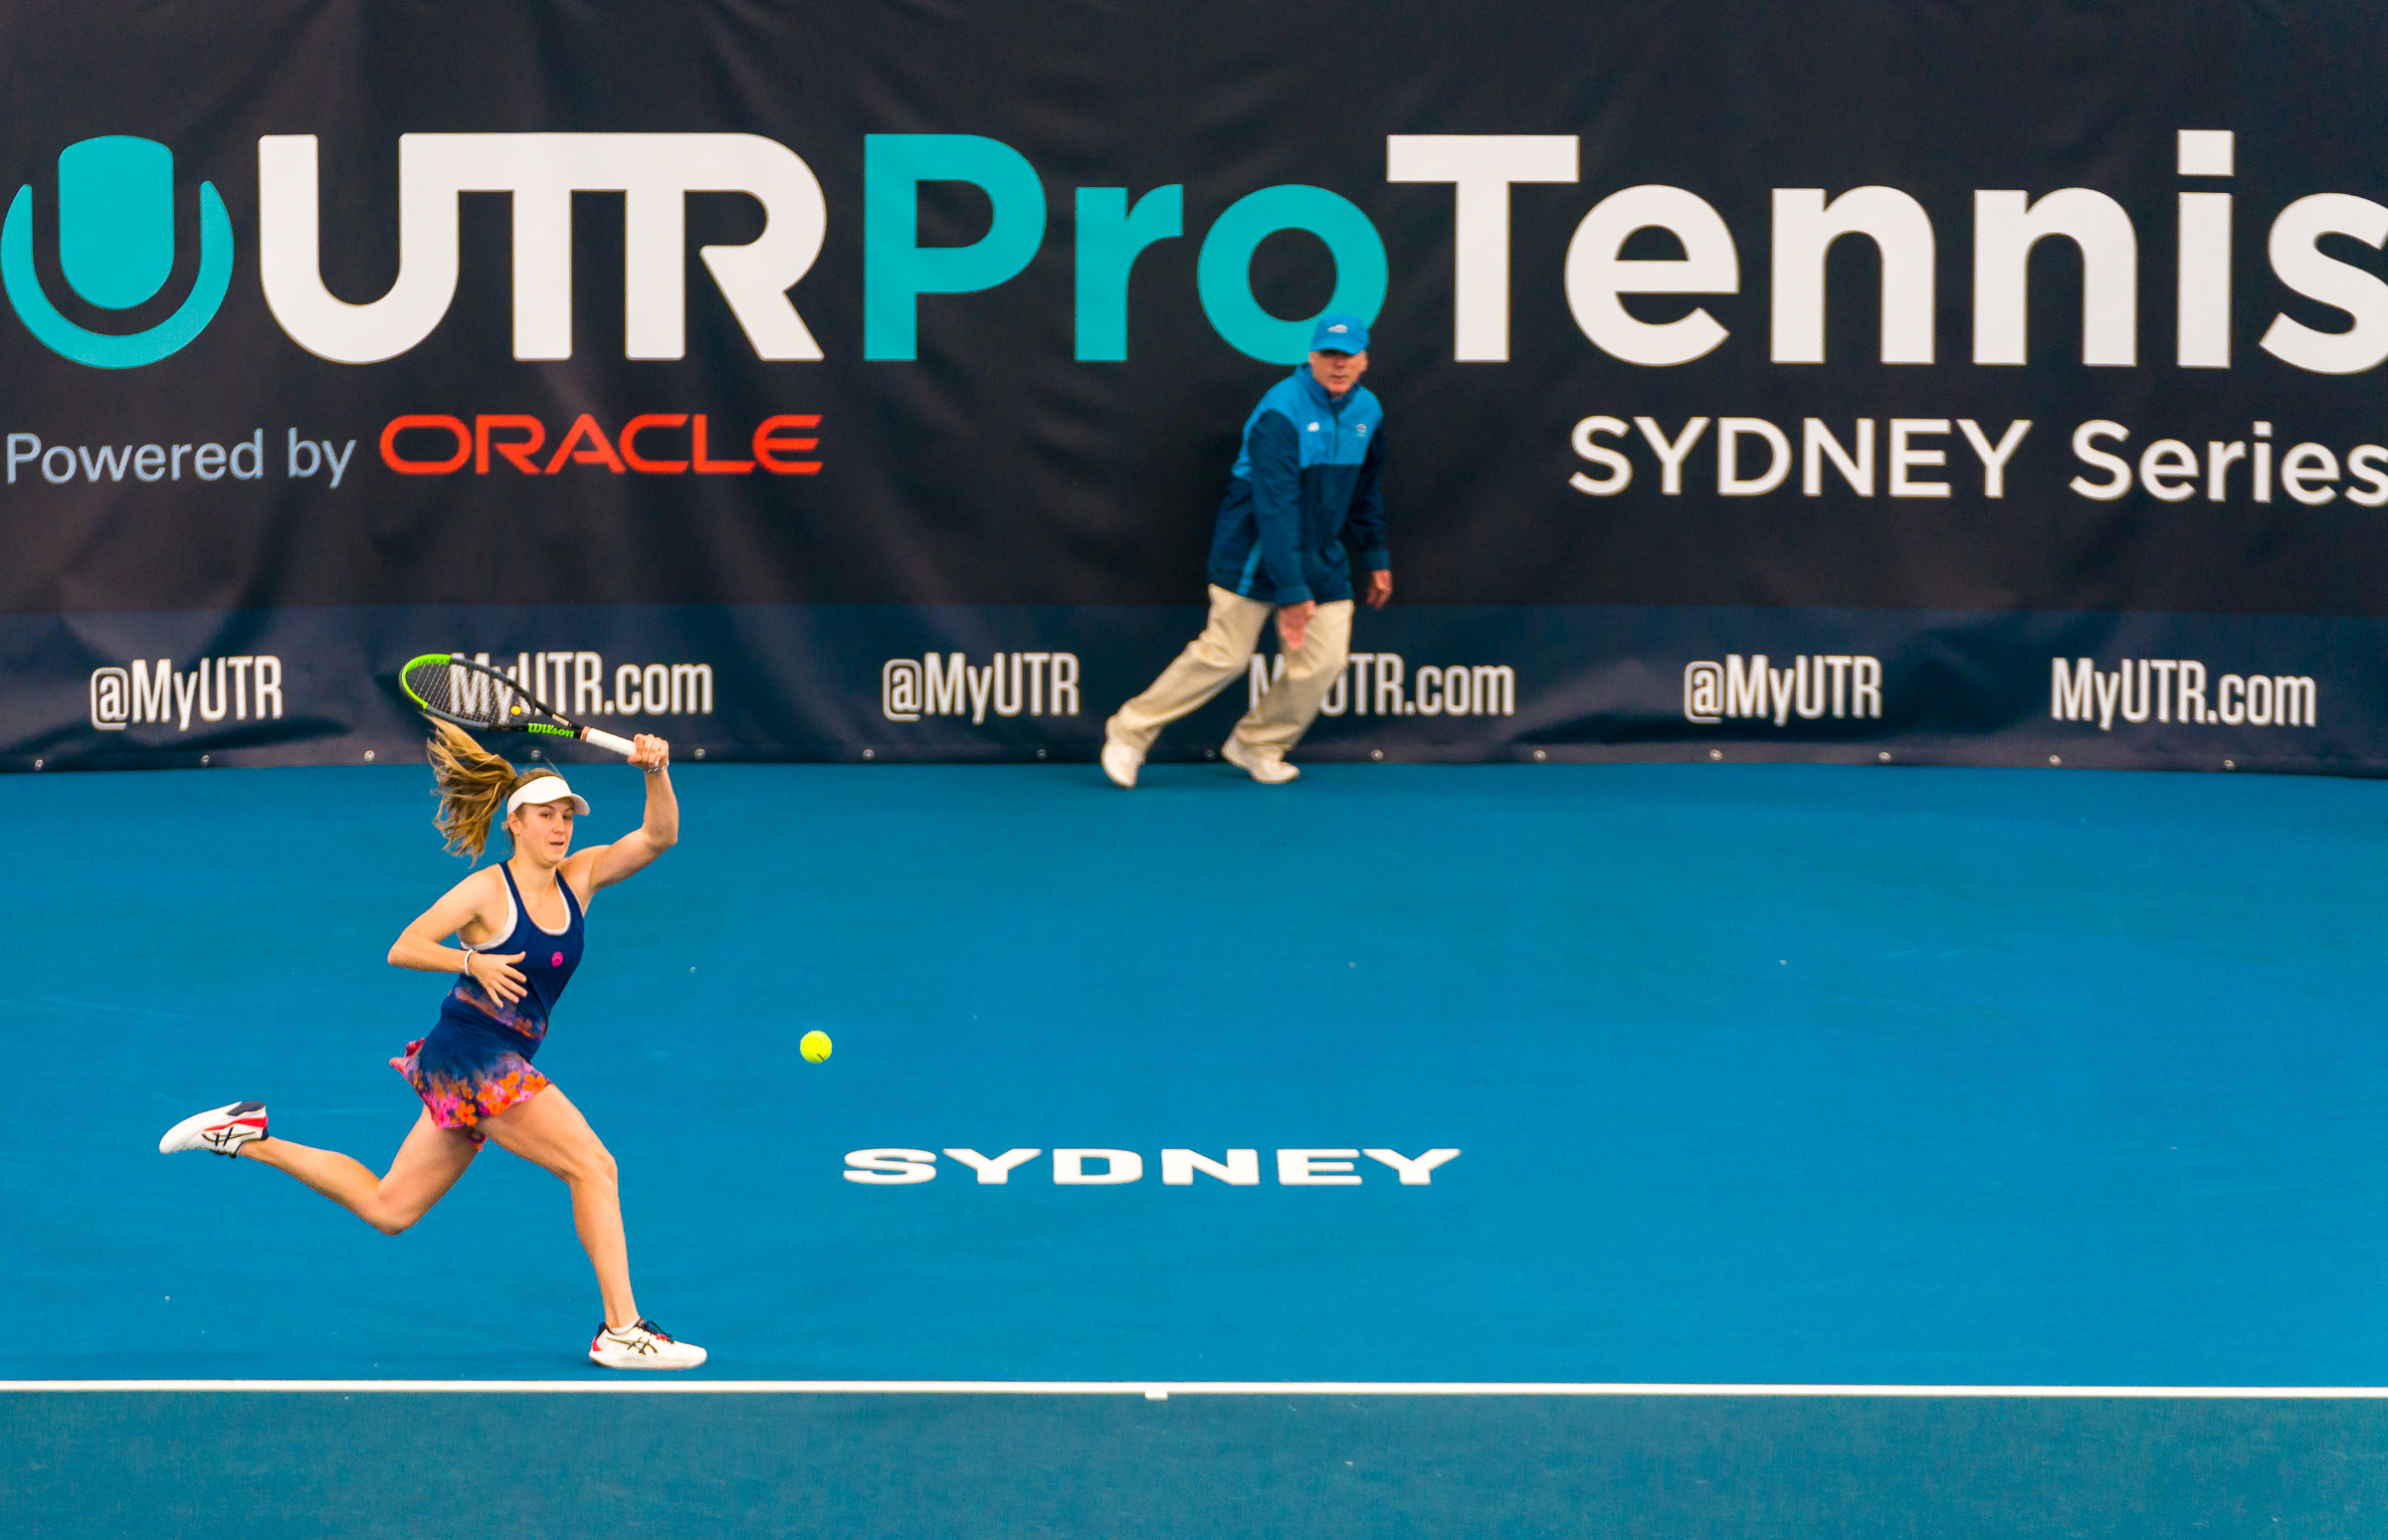 utr-pro-tennis-series-makes-a-return-to-sydney-7-august-2020